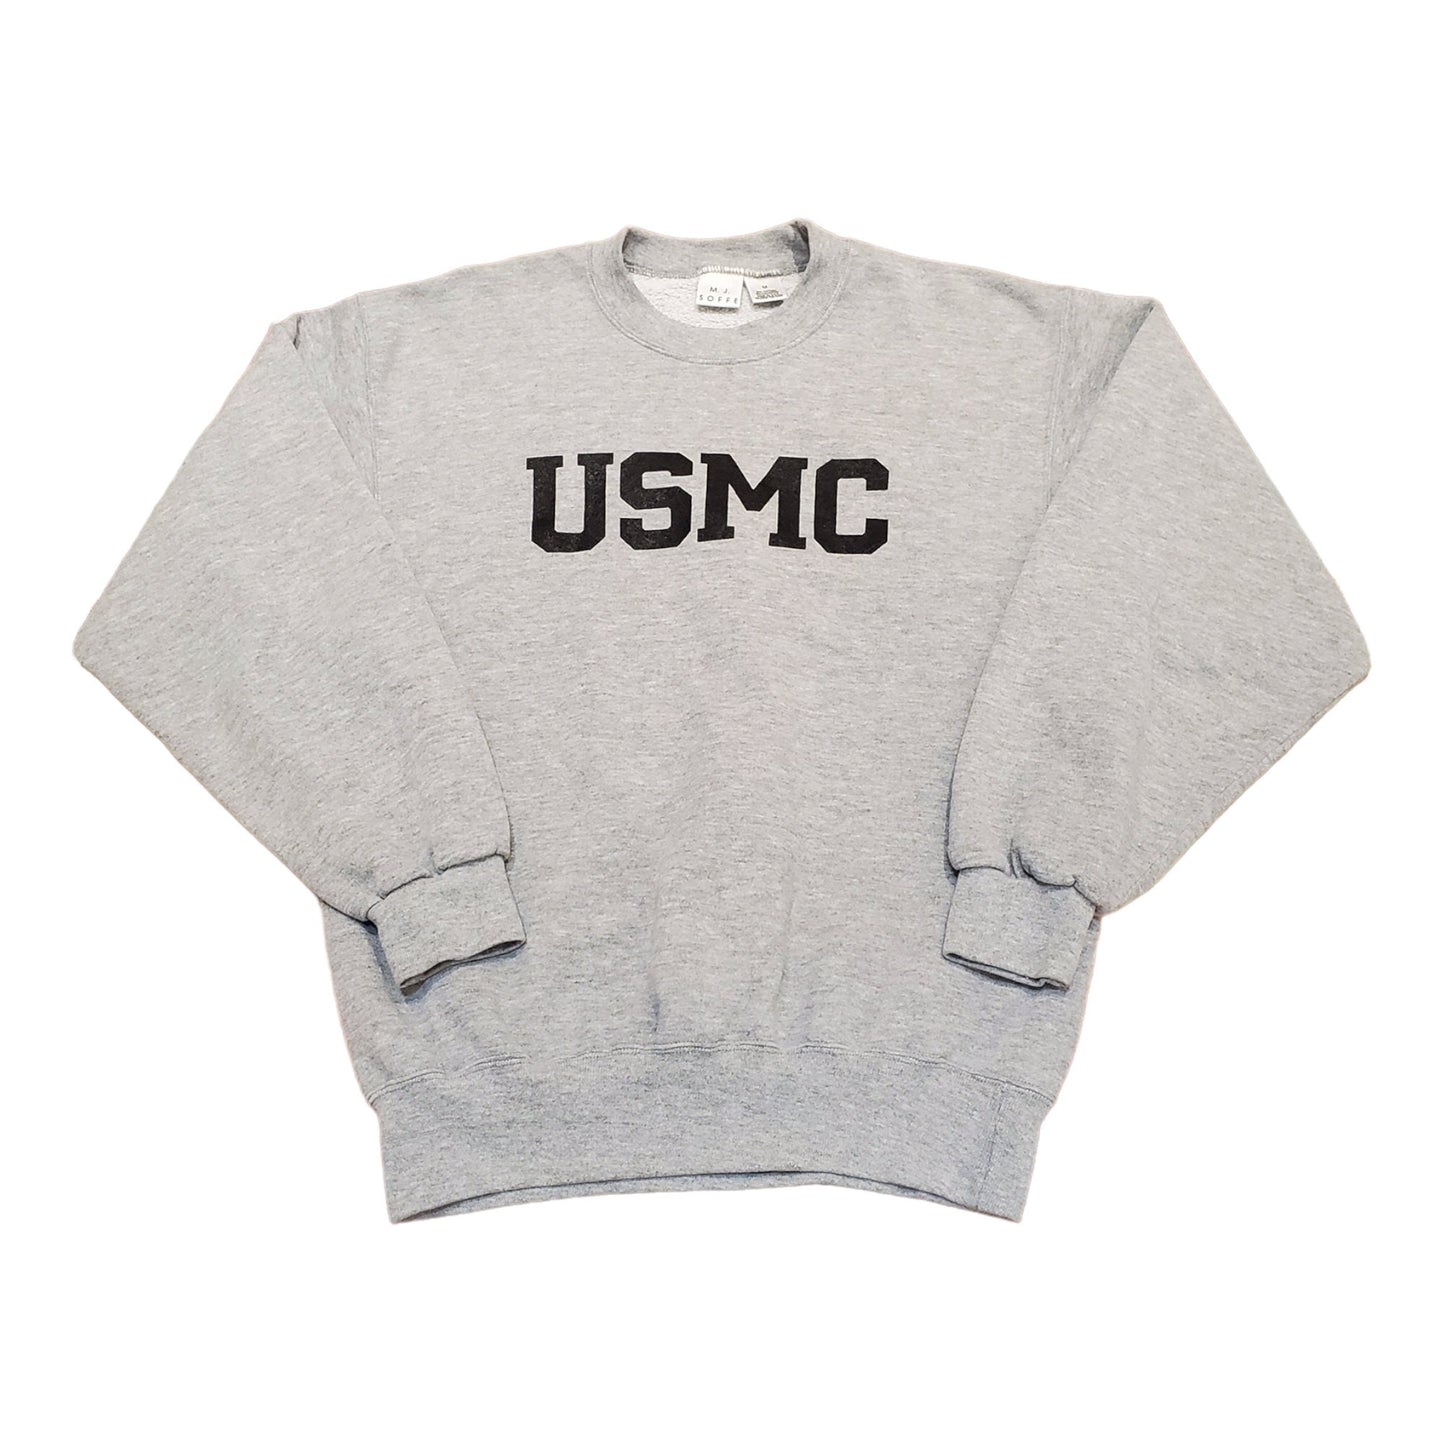 1990s MJ Soffe USMC Sweatshirt Made in USA Size M